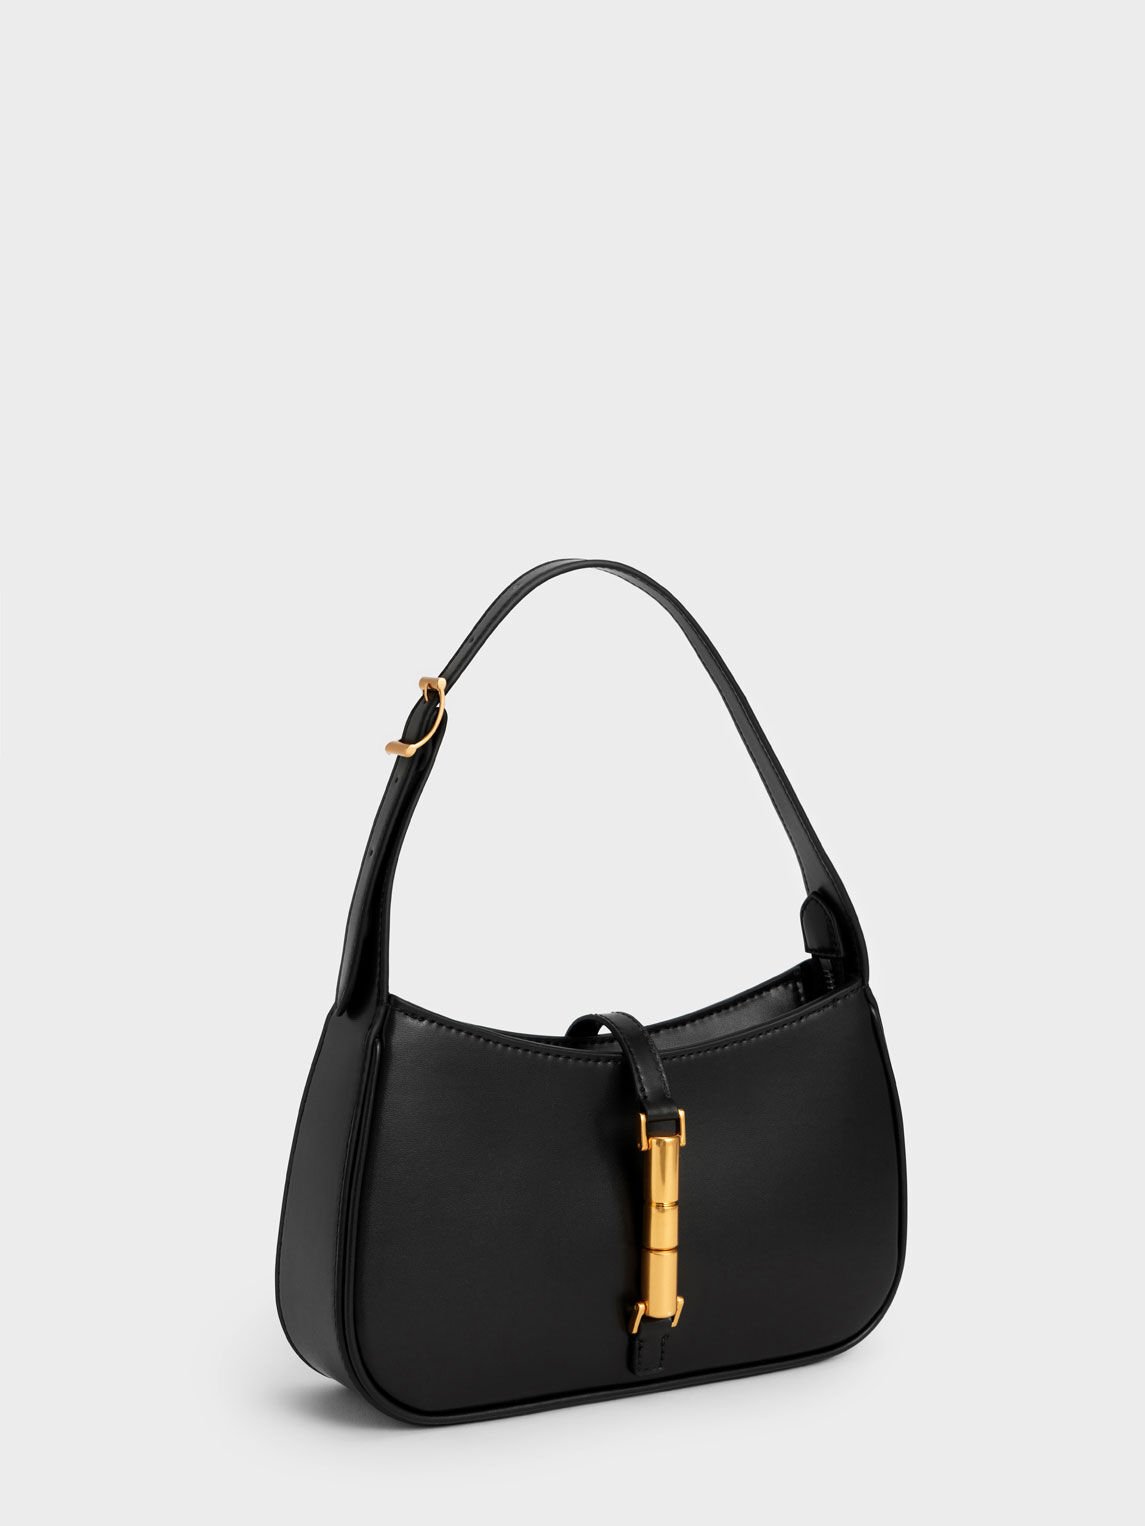 23 Years Hot Sale Genuine Luxury Replica Women's Handbag Tote Bag